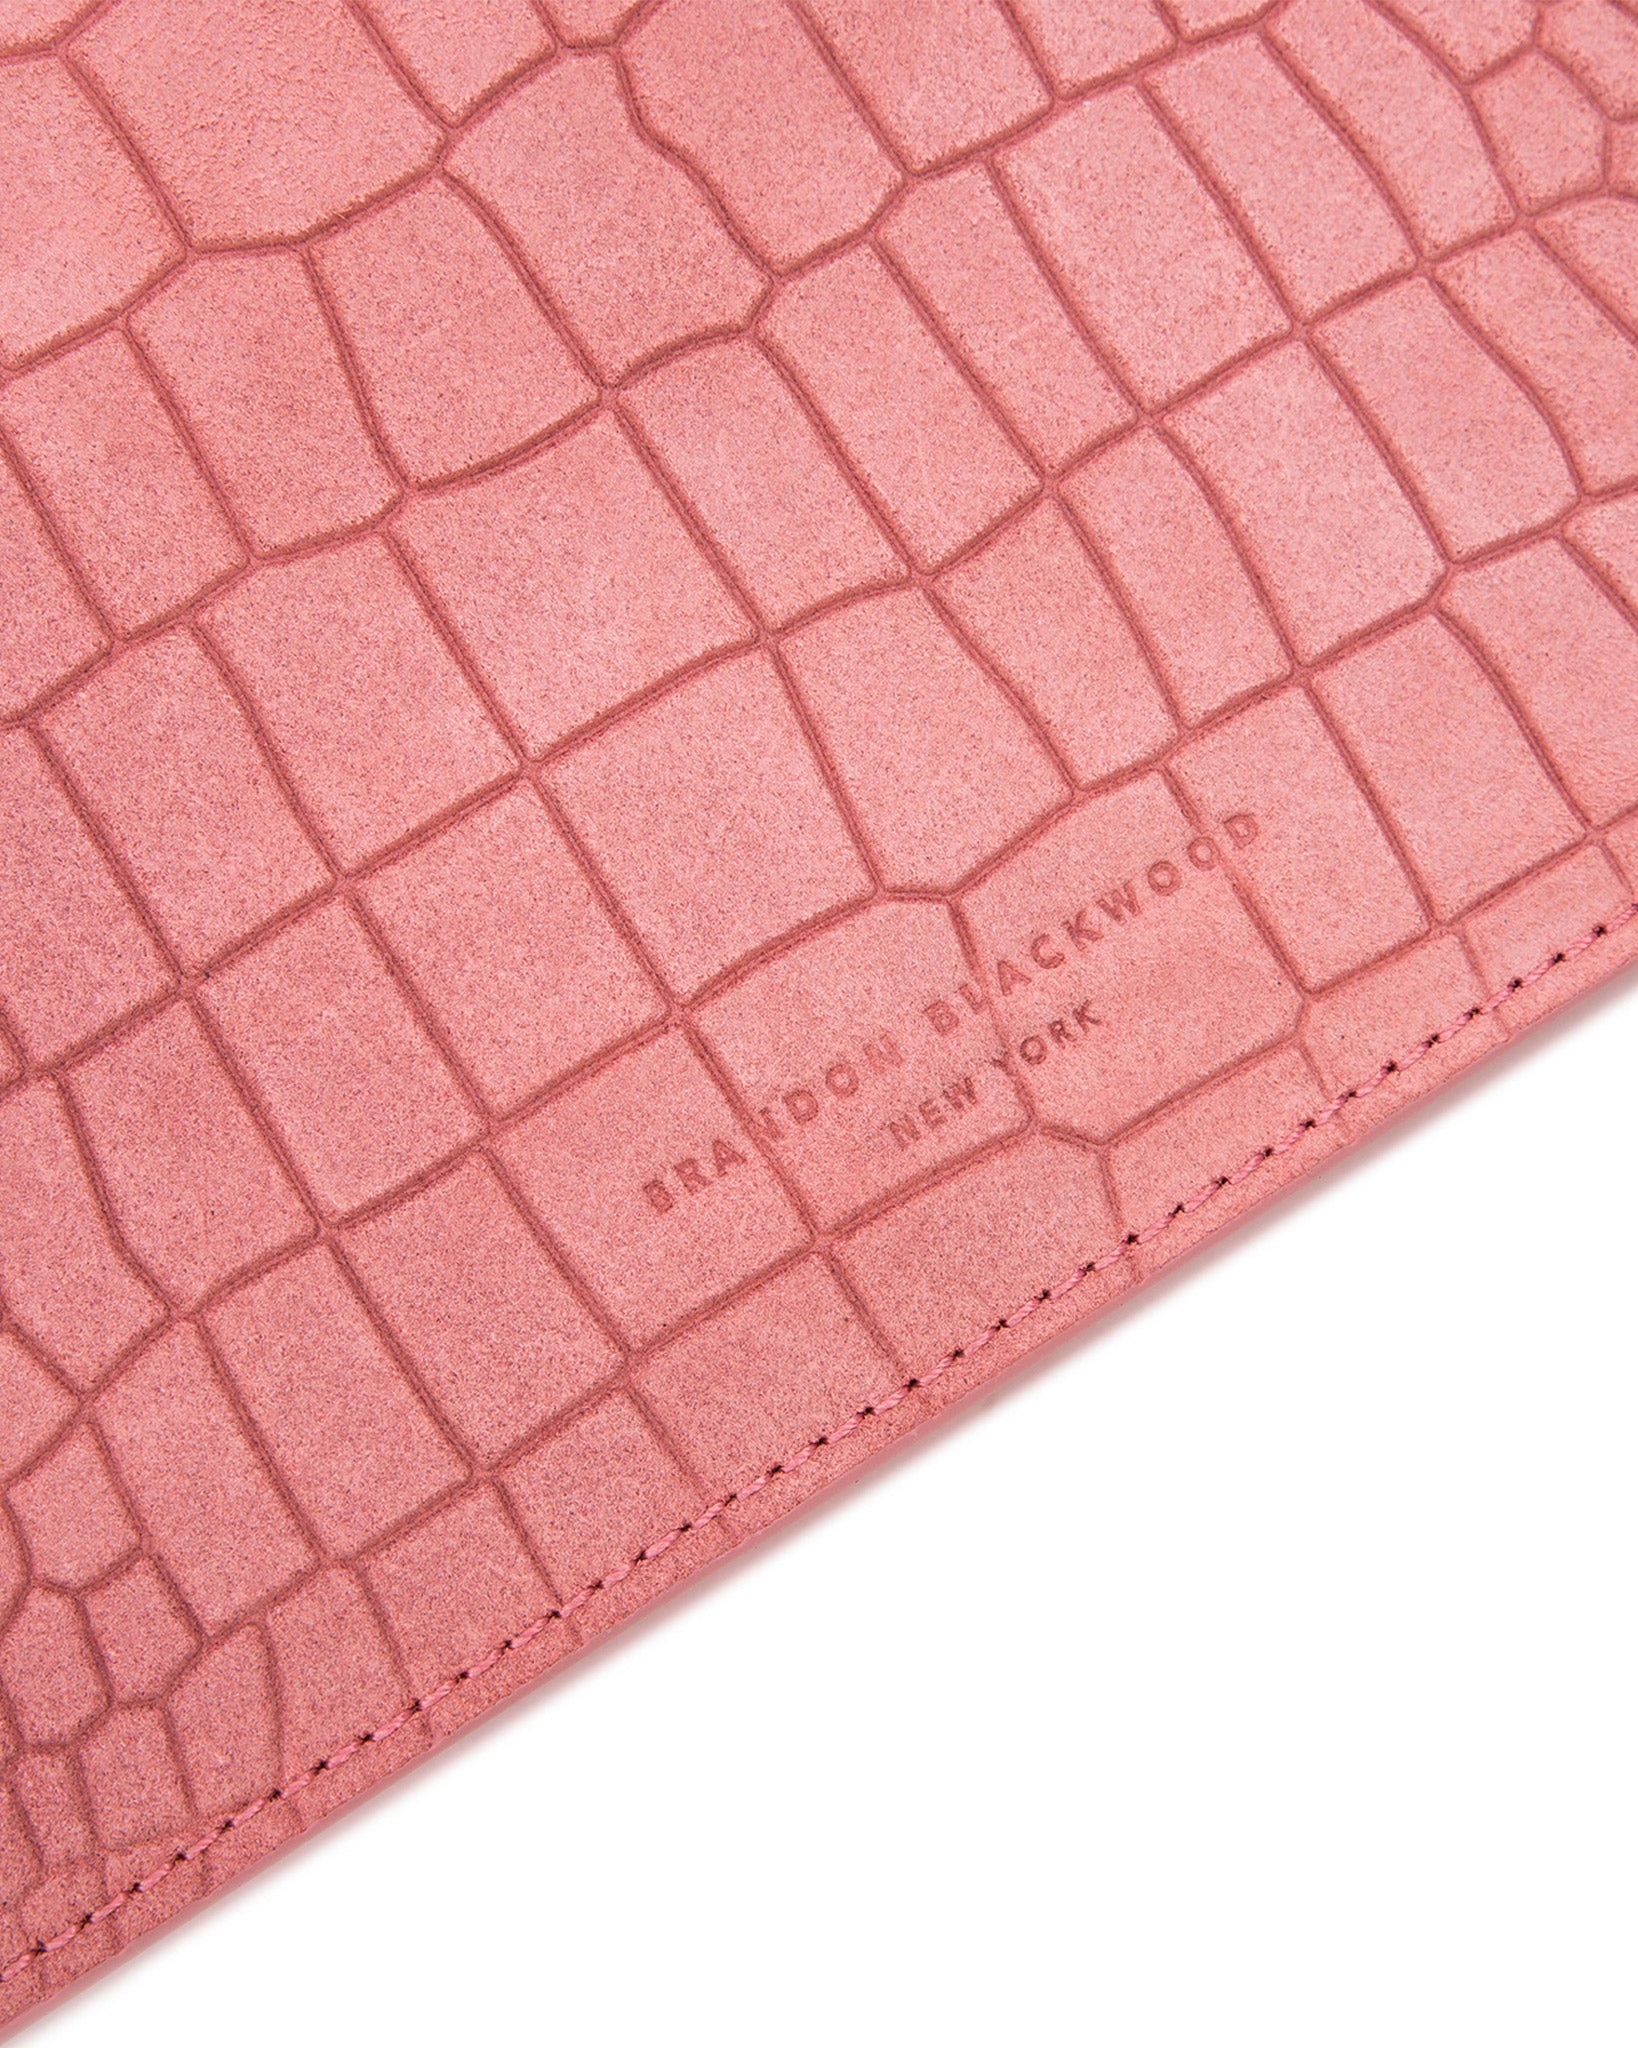 Brandon Blackwood New York - Standard Sophia Bag - Pink Croc Embossed